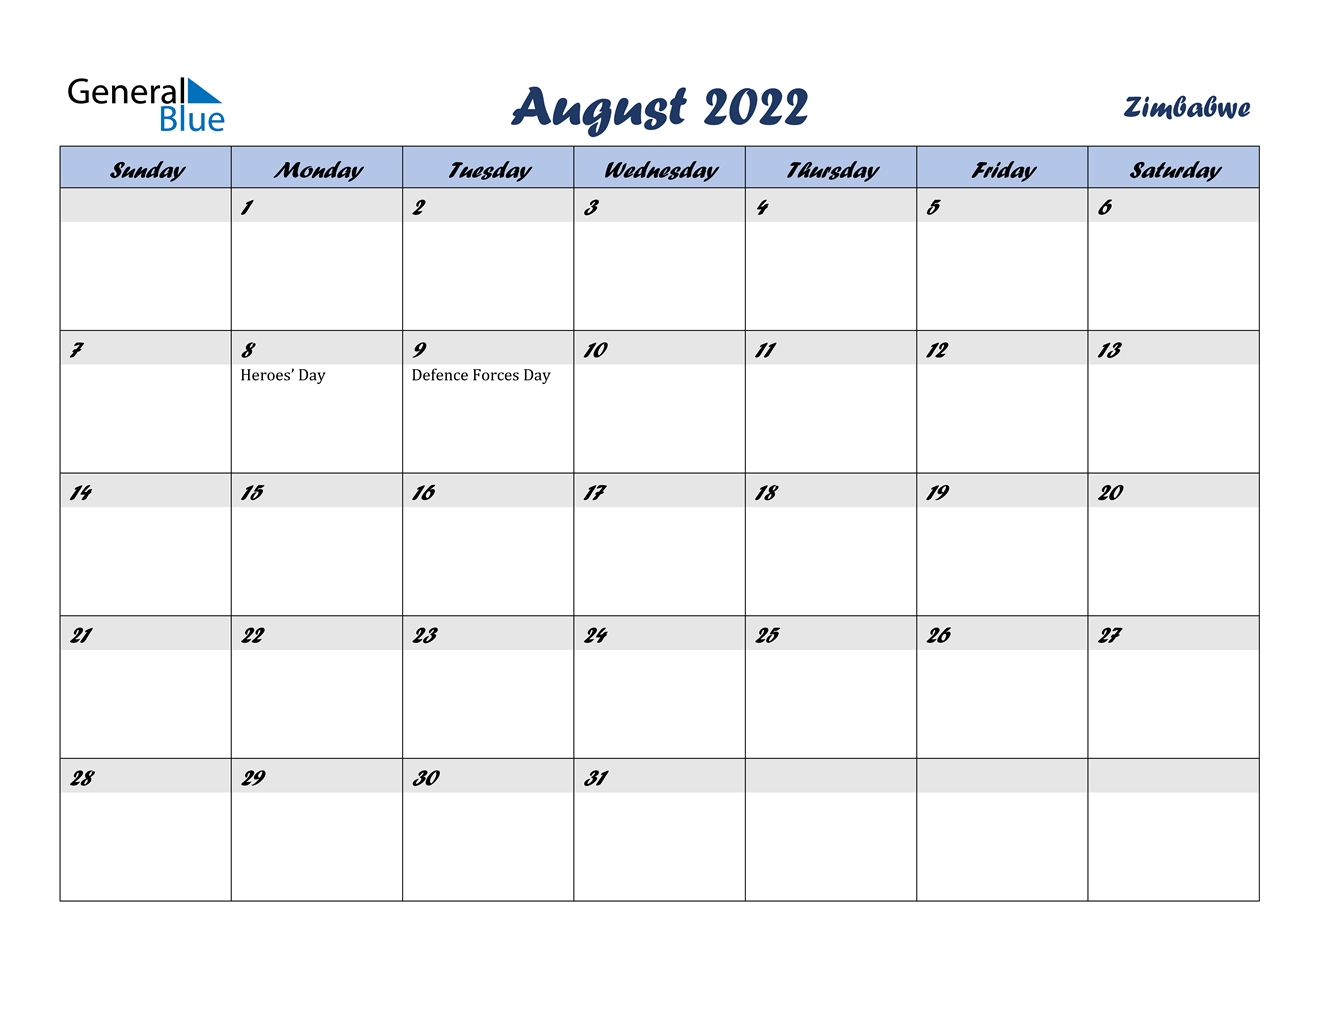 August 2022 Calendar - Zimbabwe